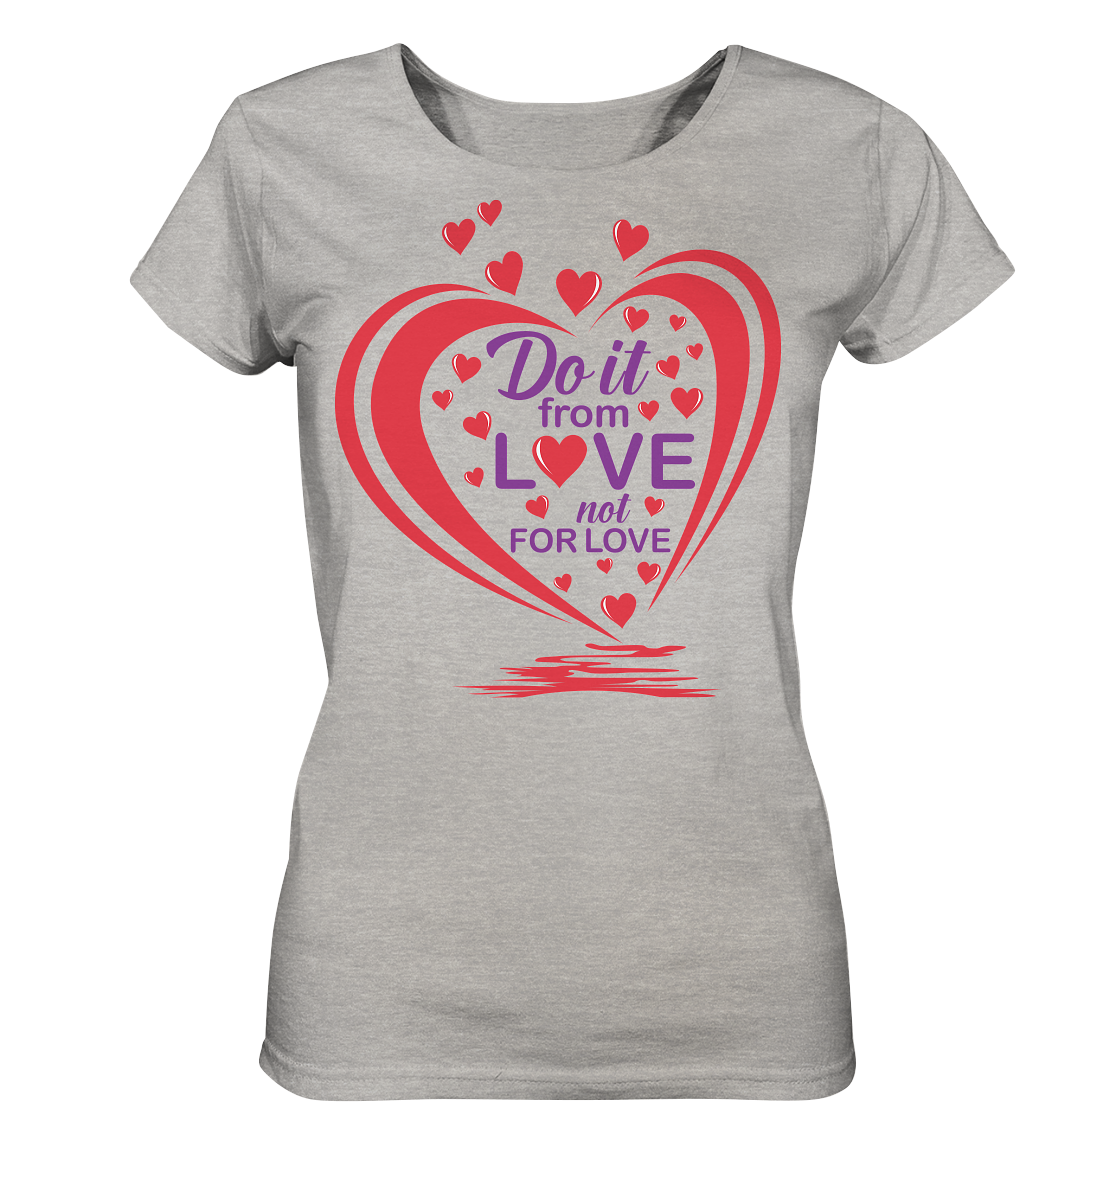 Do it from love not for love - Ladies Organic Shirt (mottled)